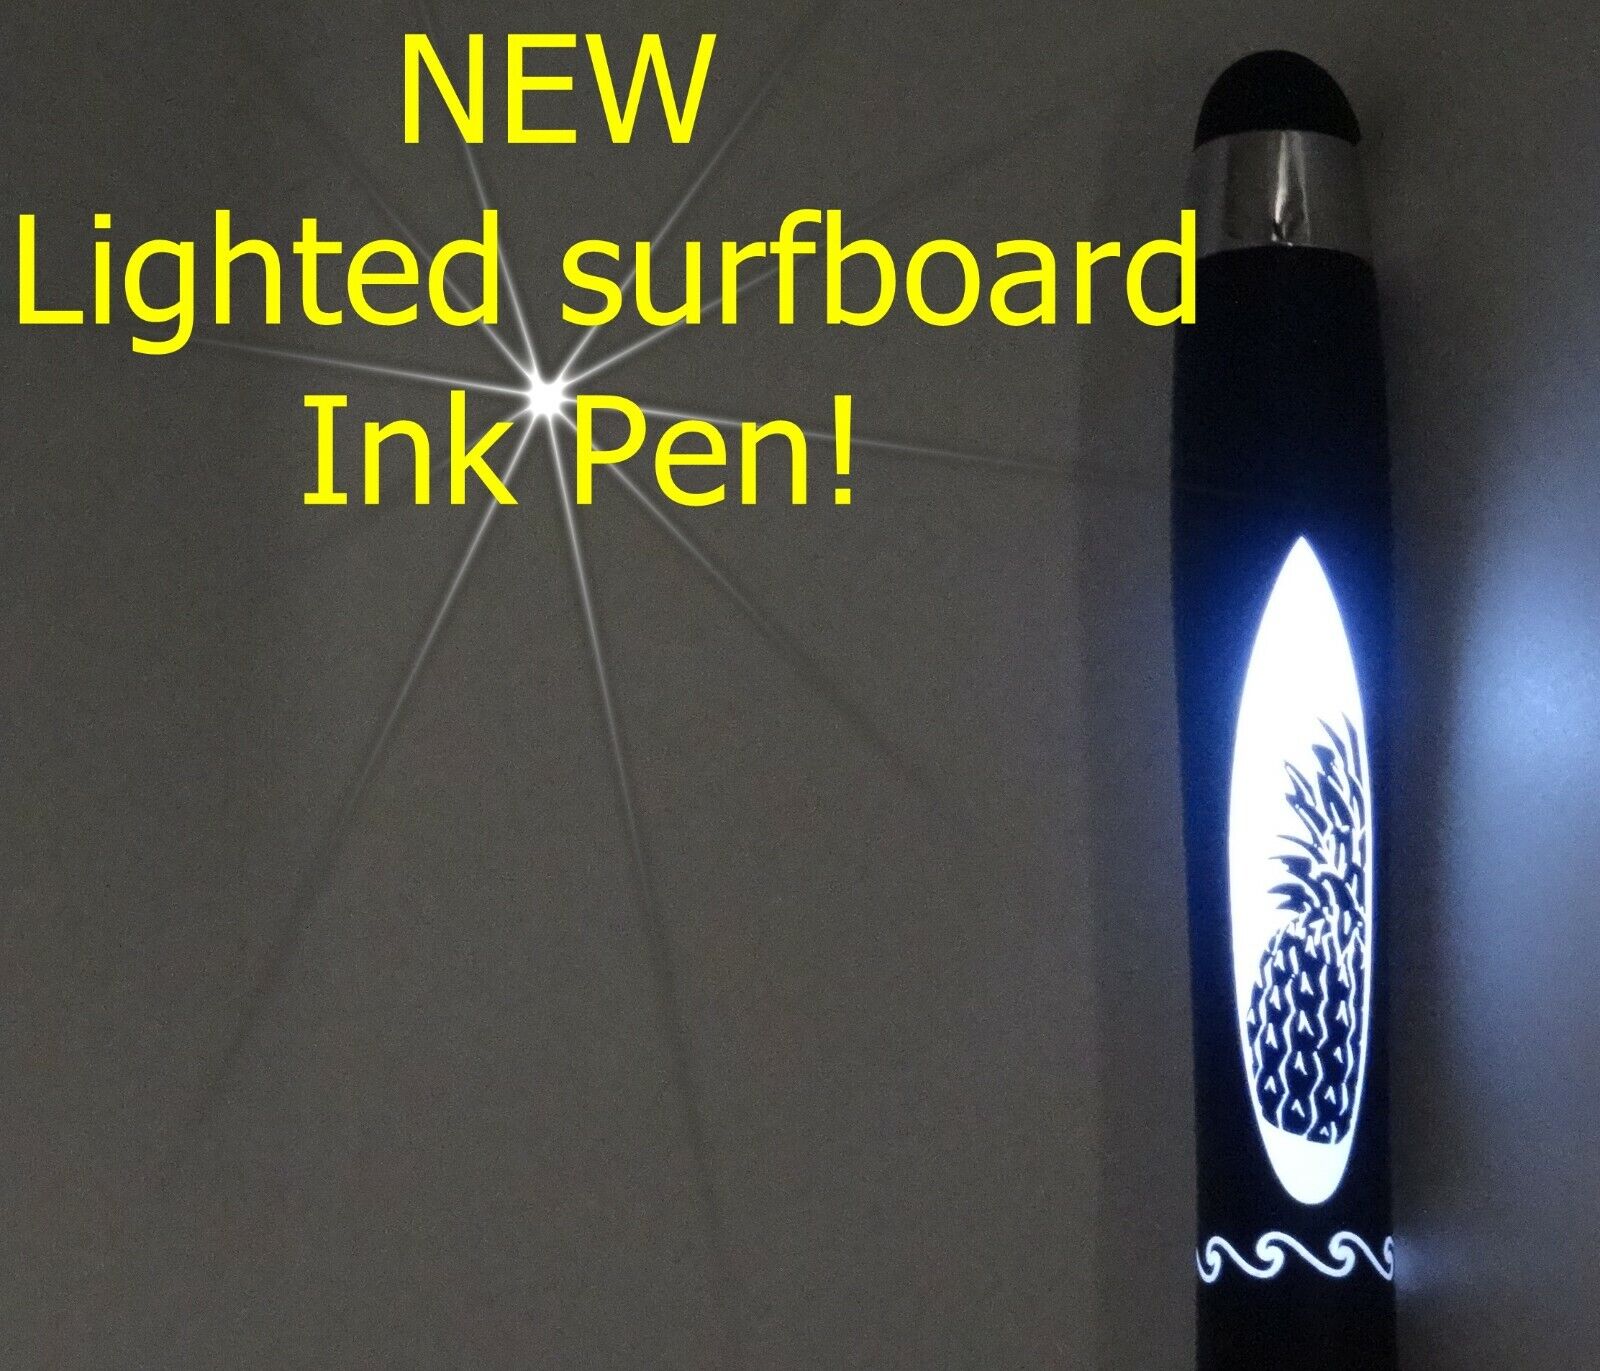 New Lighted Surfboard ink pen   Pineapple design